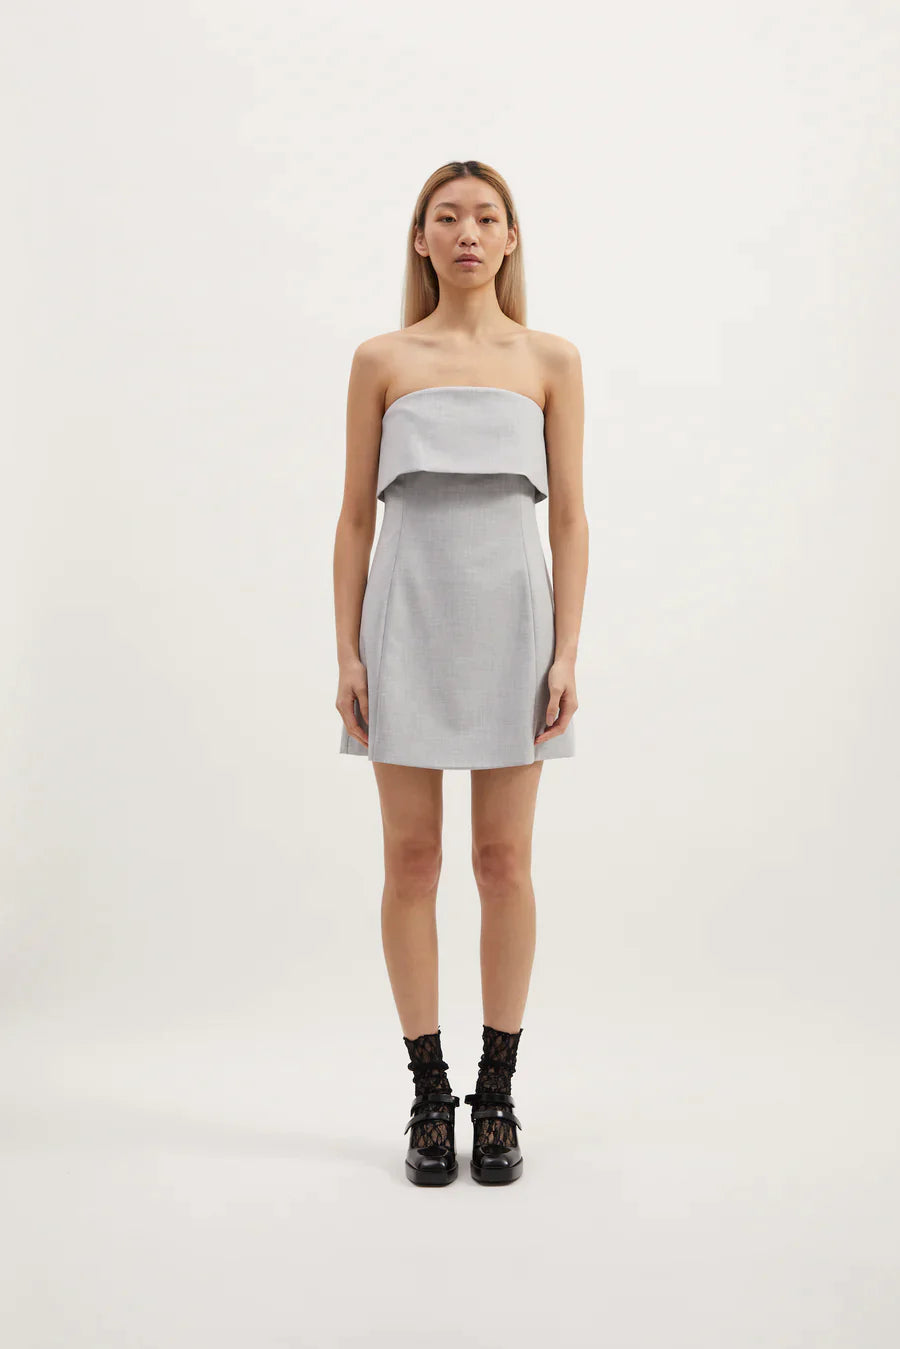 Remain Aubrey Mini Dress - Slate  Hyde Boutique   